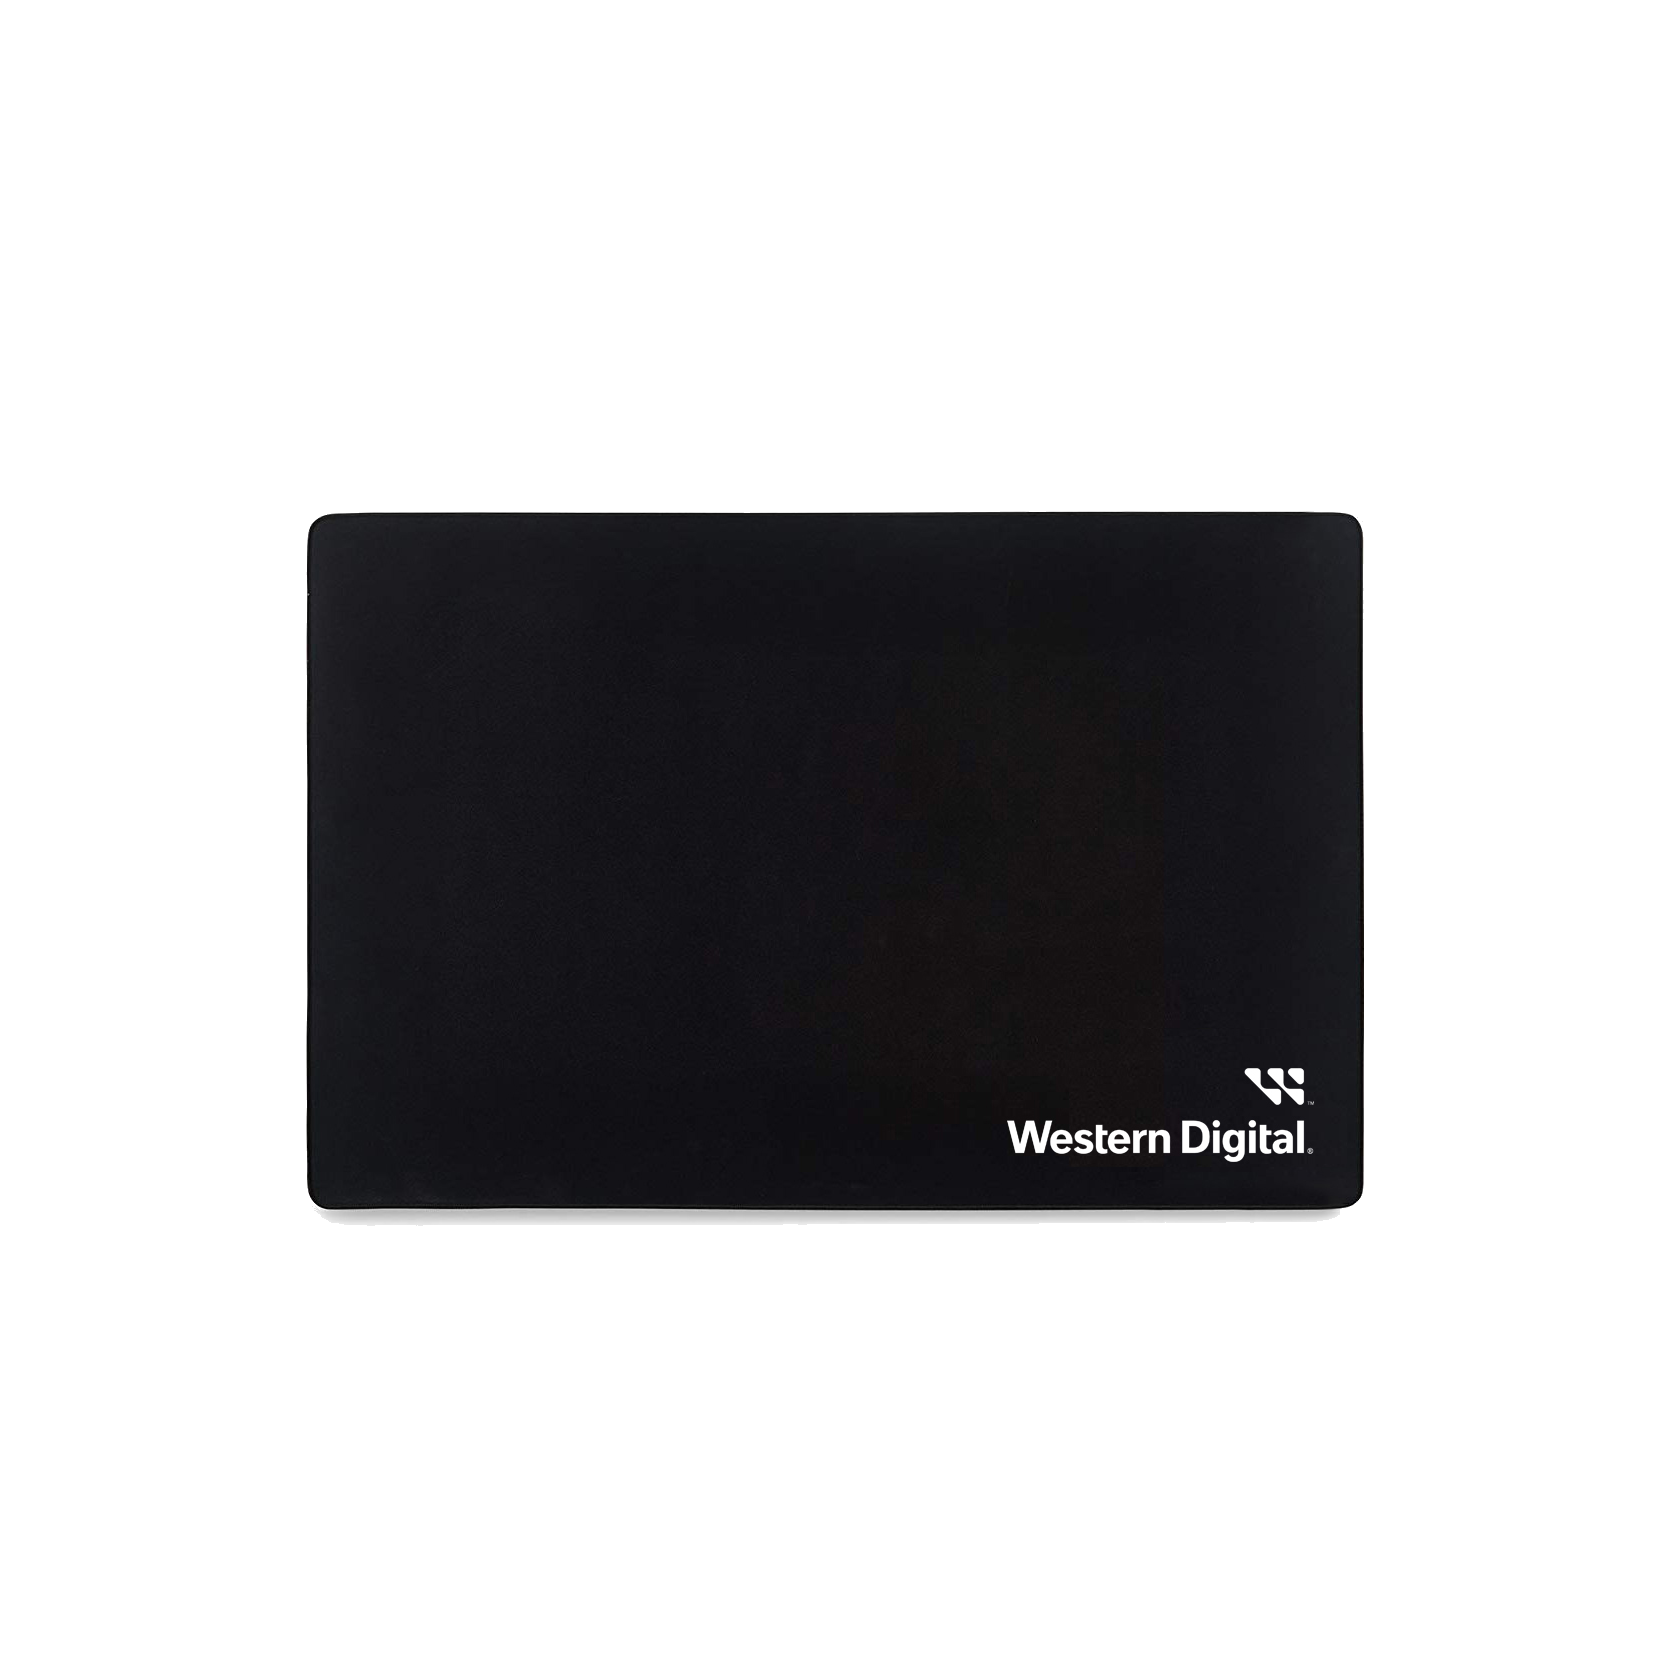 Western Digital Mousepad - WDMX078RNW